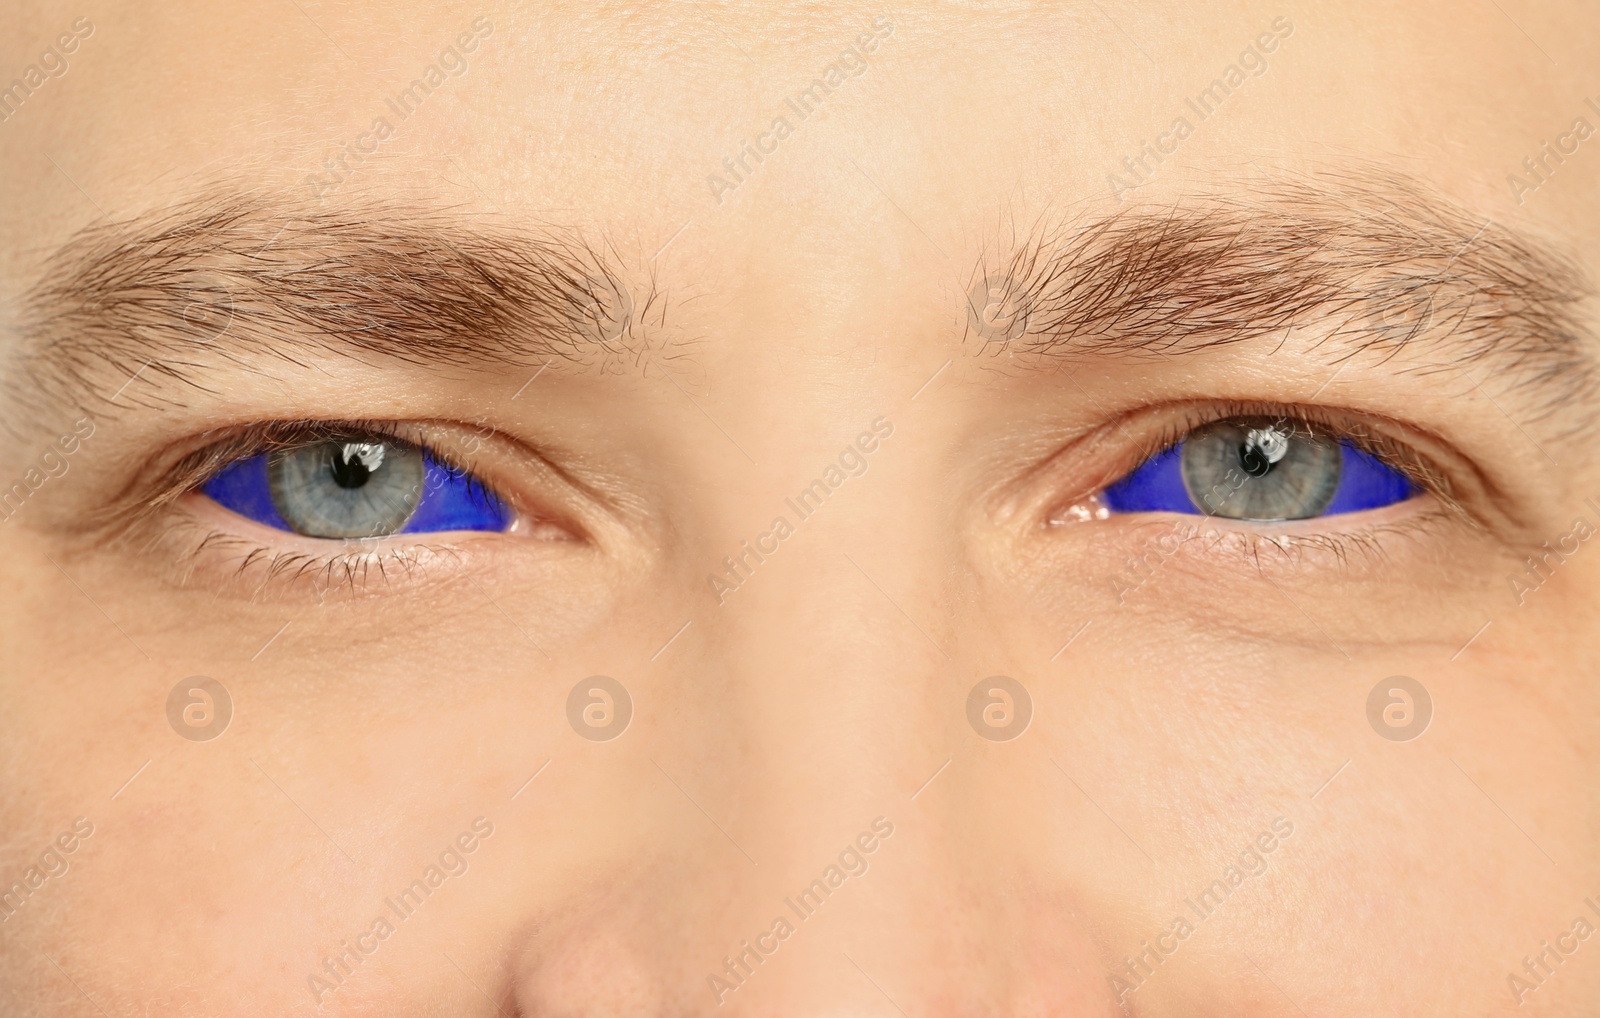 Image of Closeup view of man with eyeballs tattoo